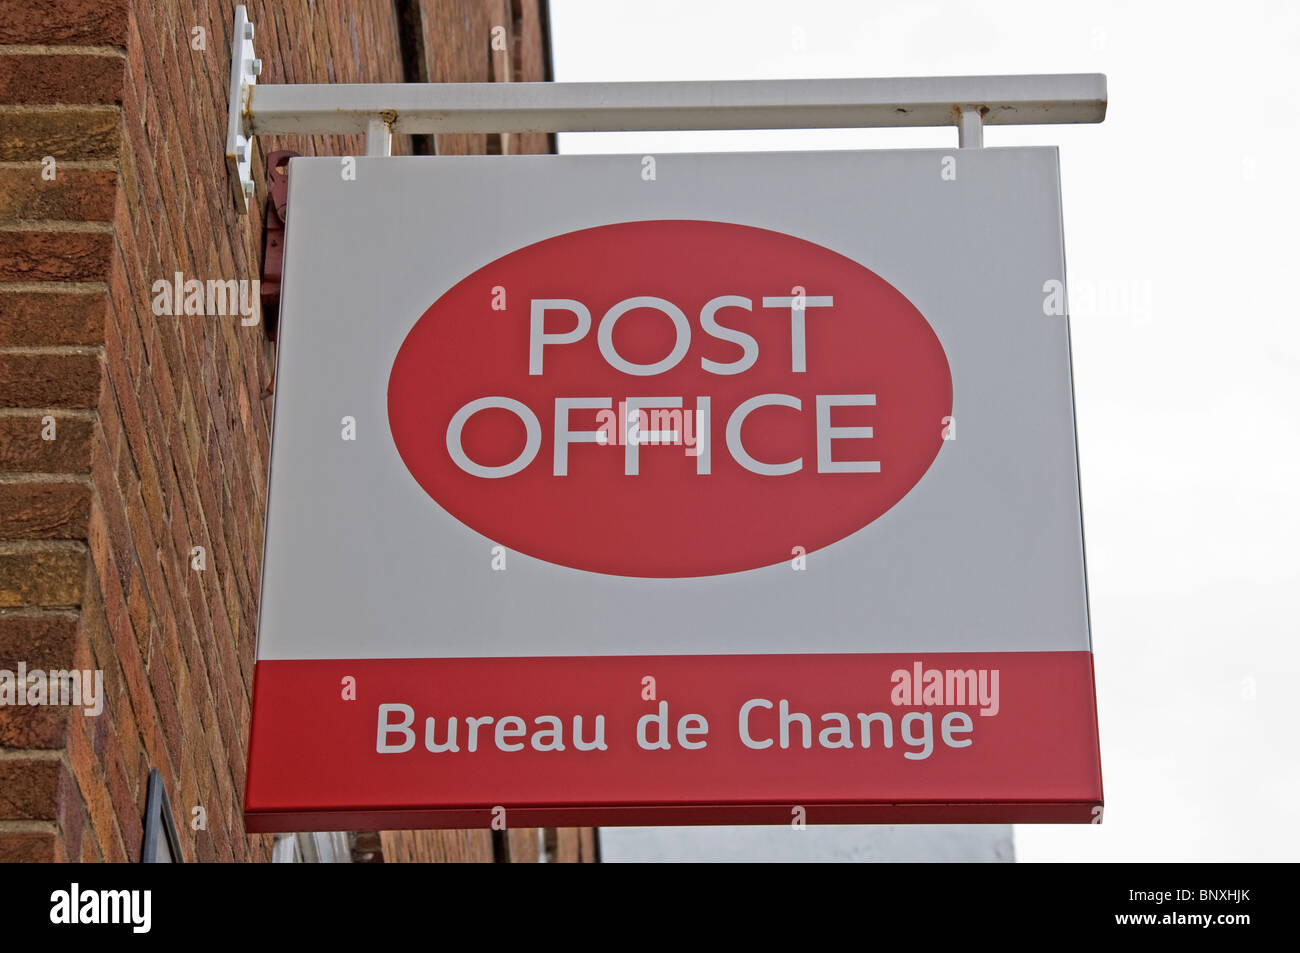 Post Office and Bureau de Change sign Stock Photo